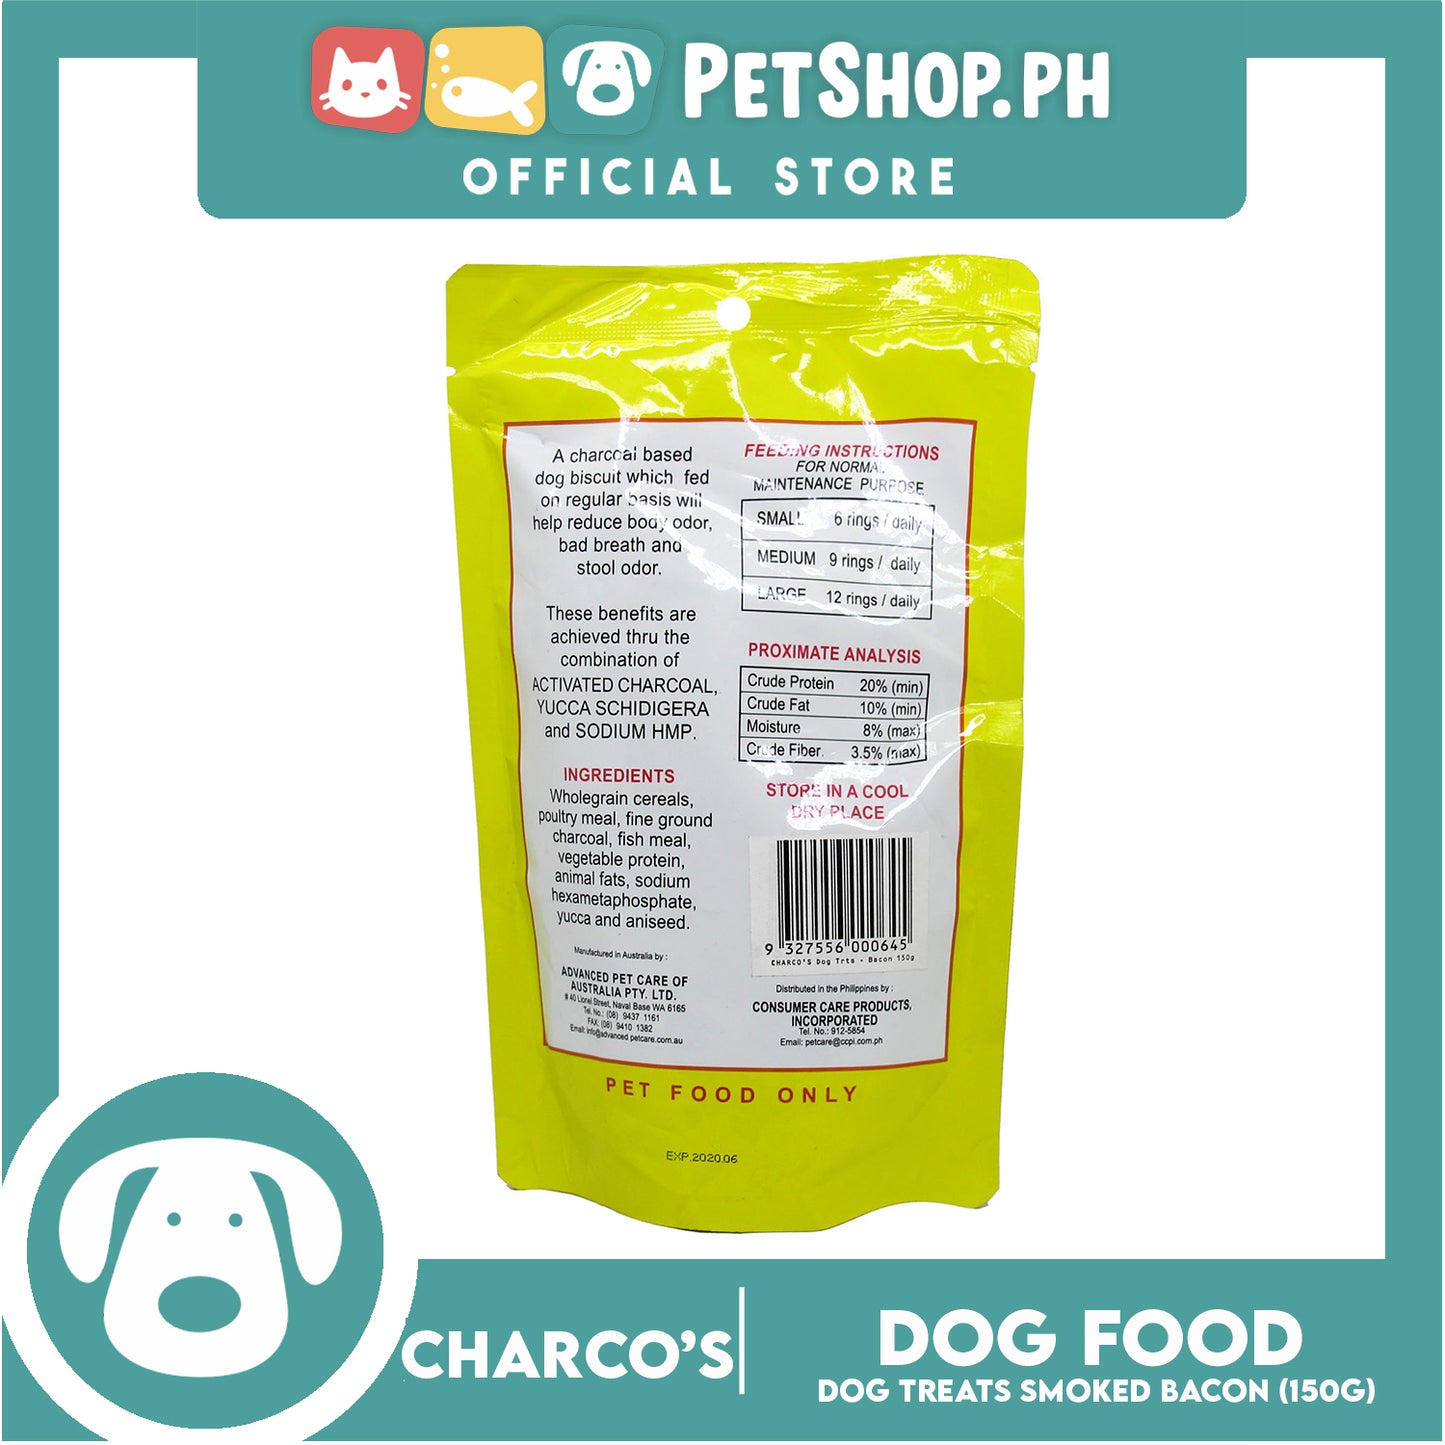 Charco's Dog Treats 150g (Smoked Bacon) Reduce Body Odor, Bad Breath And Stool Odor And Improves